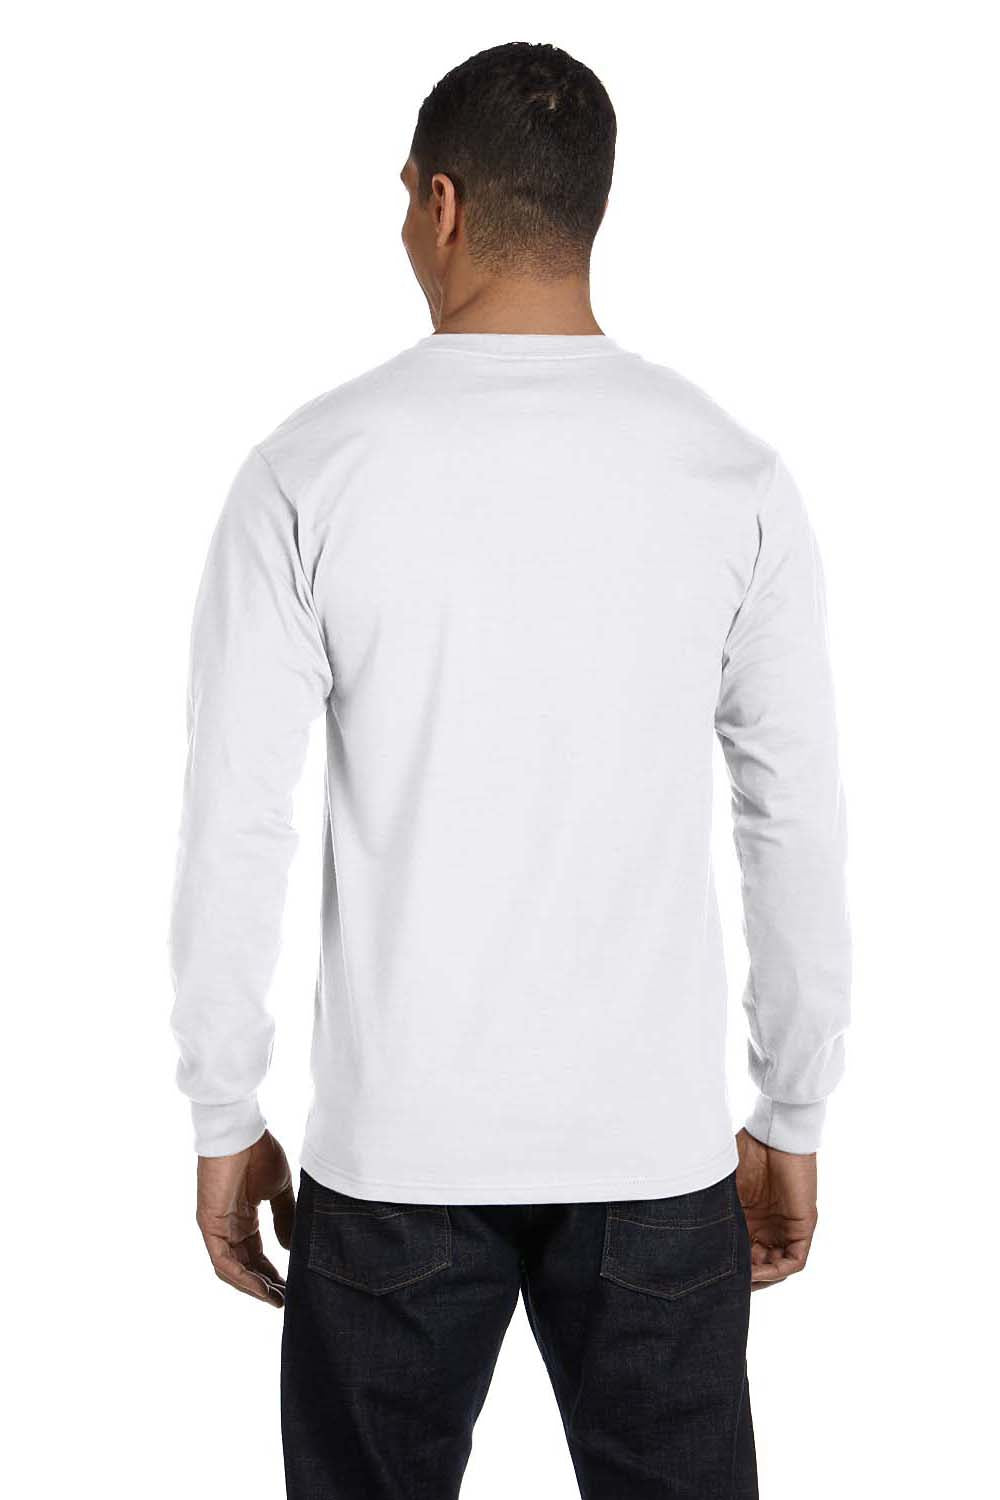 Hanes 5186 Mens Beefy-T Long Sleeve Crewneck T-Shirt White Back